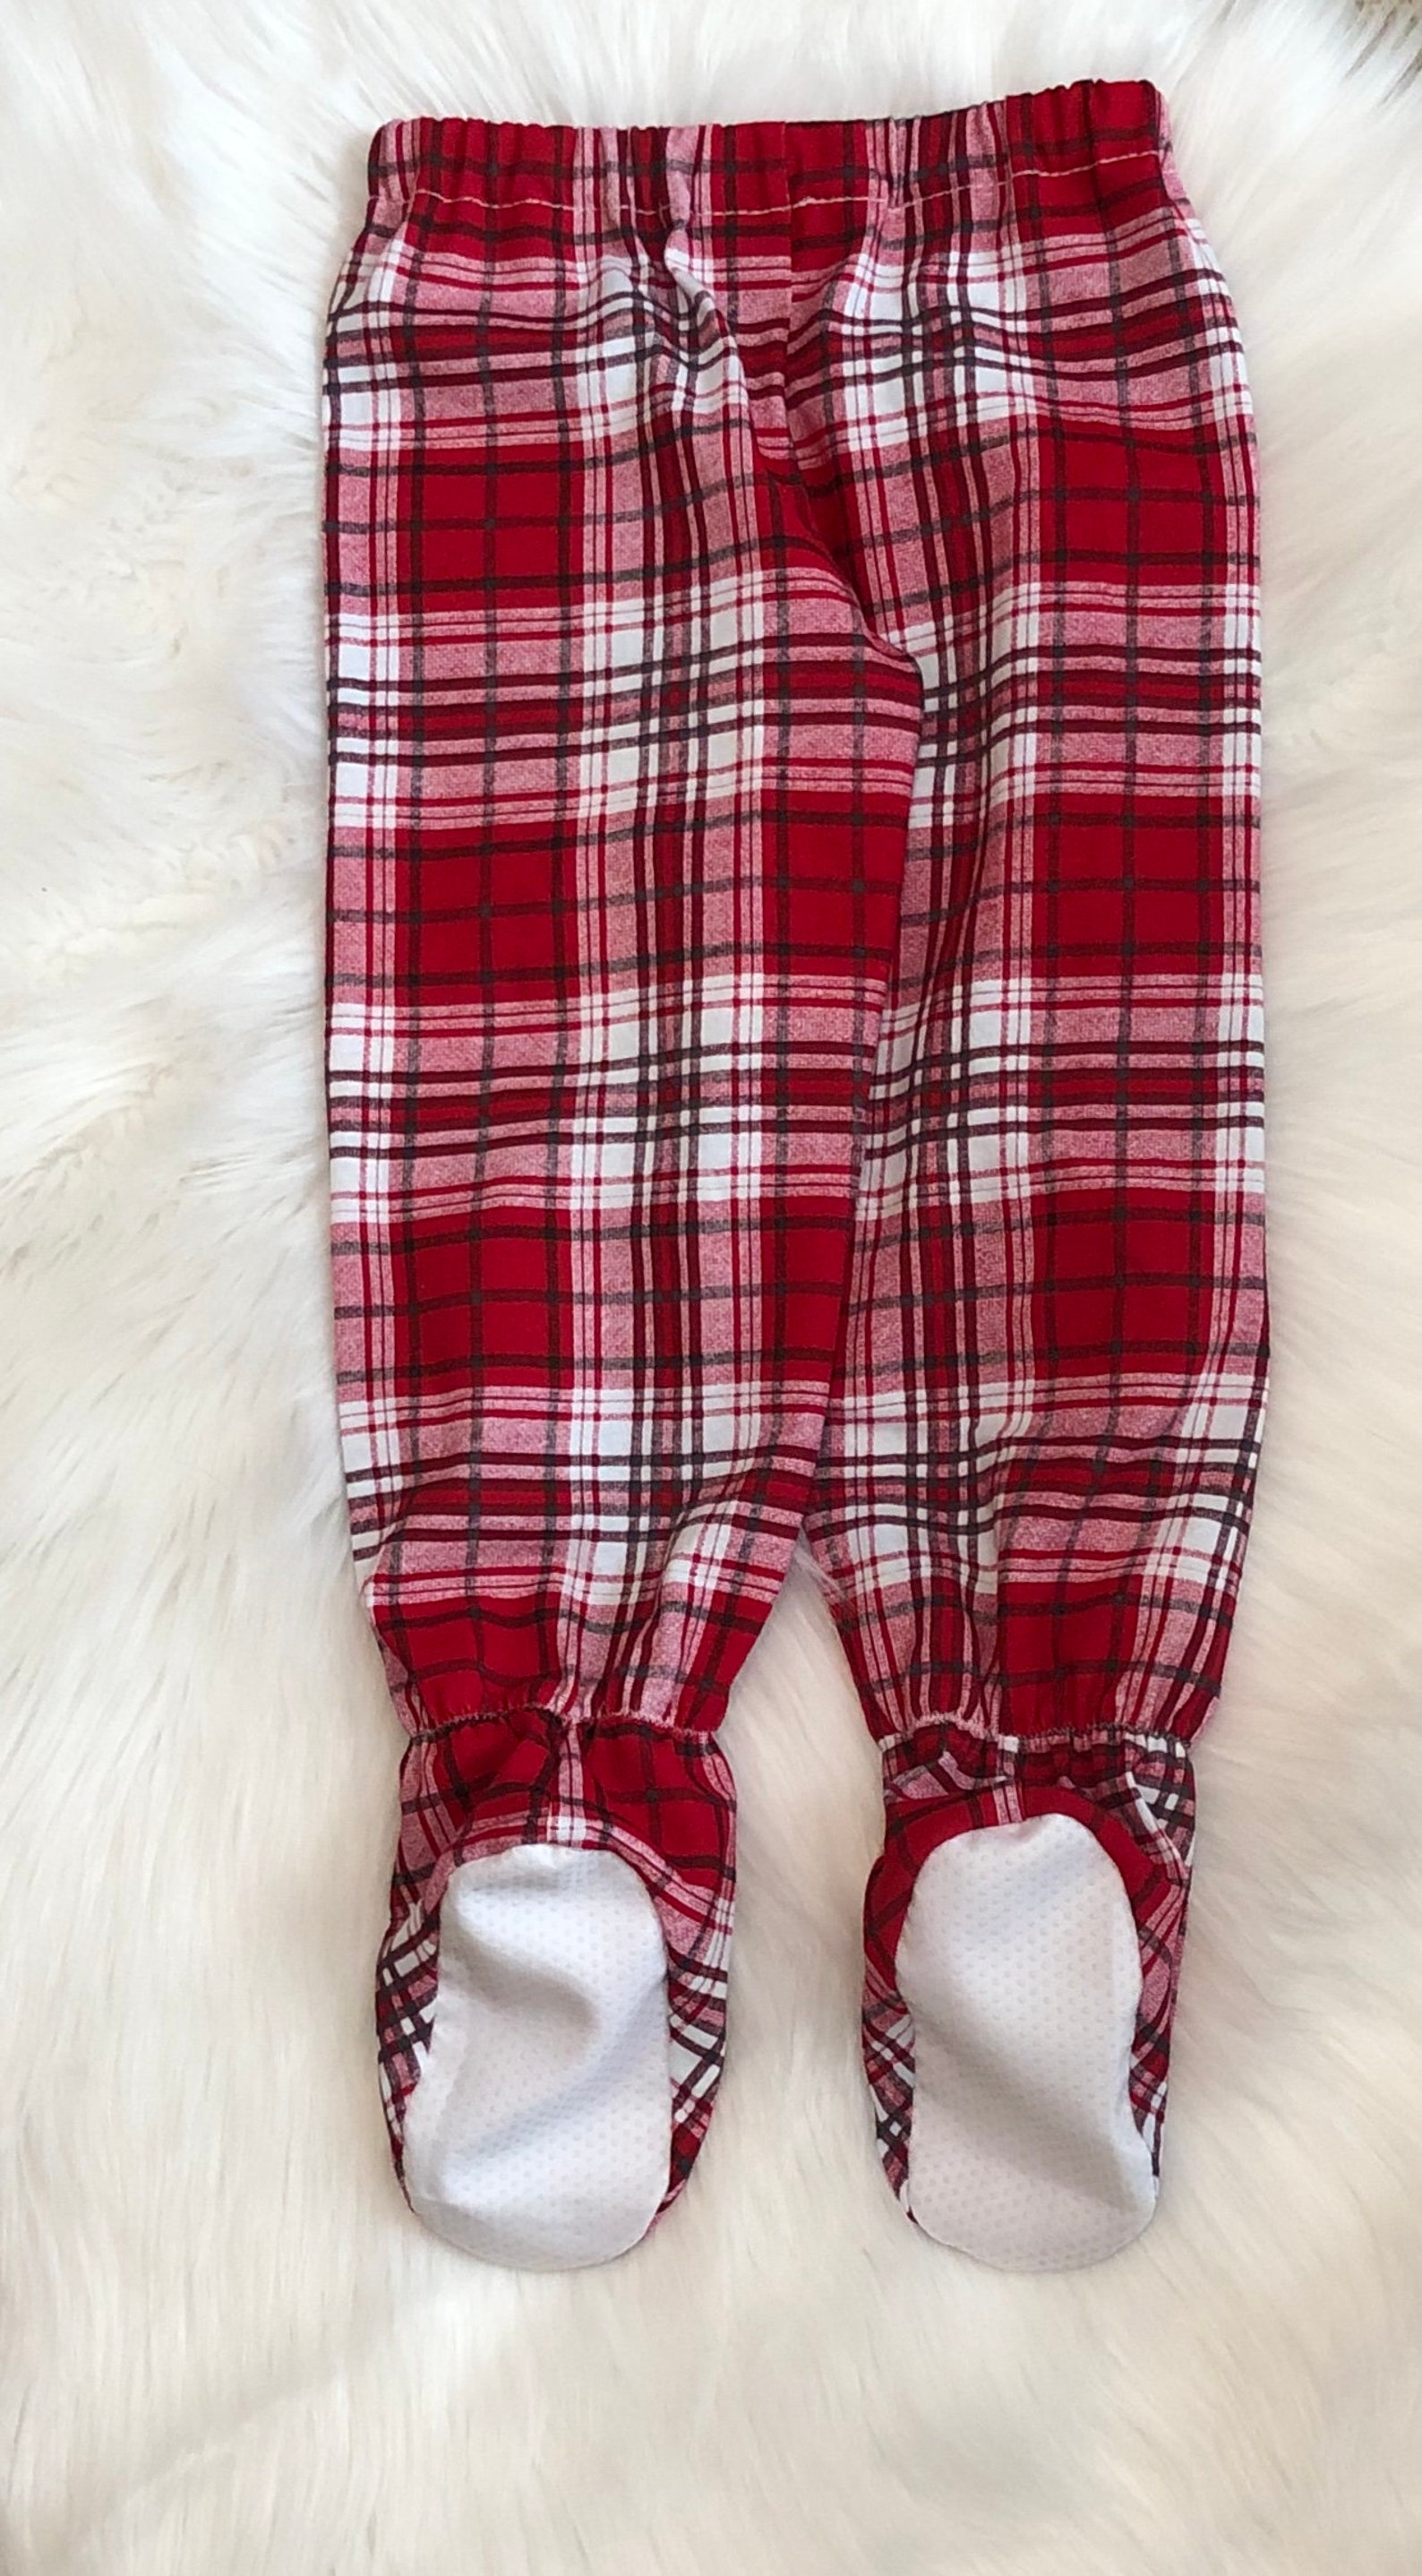 Boy's Size 3T Footed Pajama Pants Stretch Knit Pajamas | Etsy